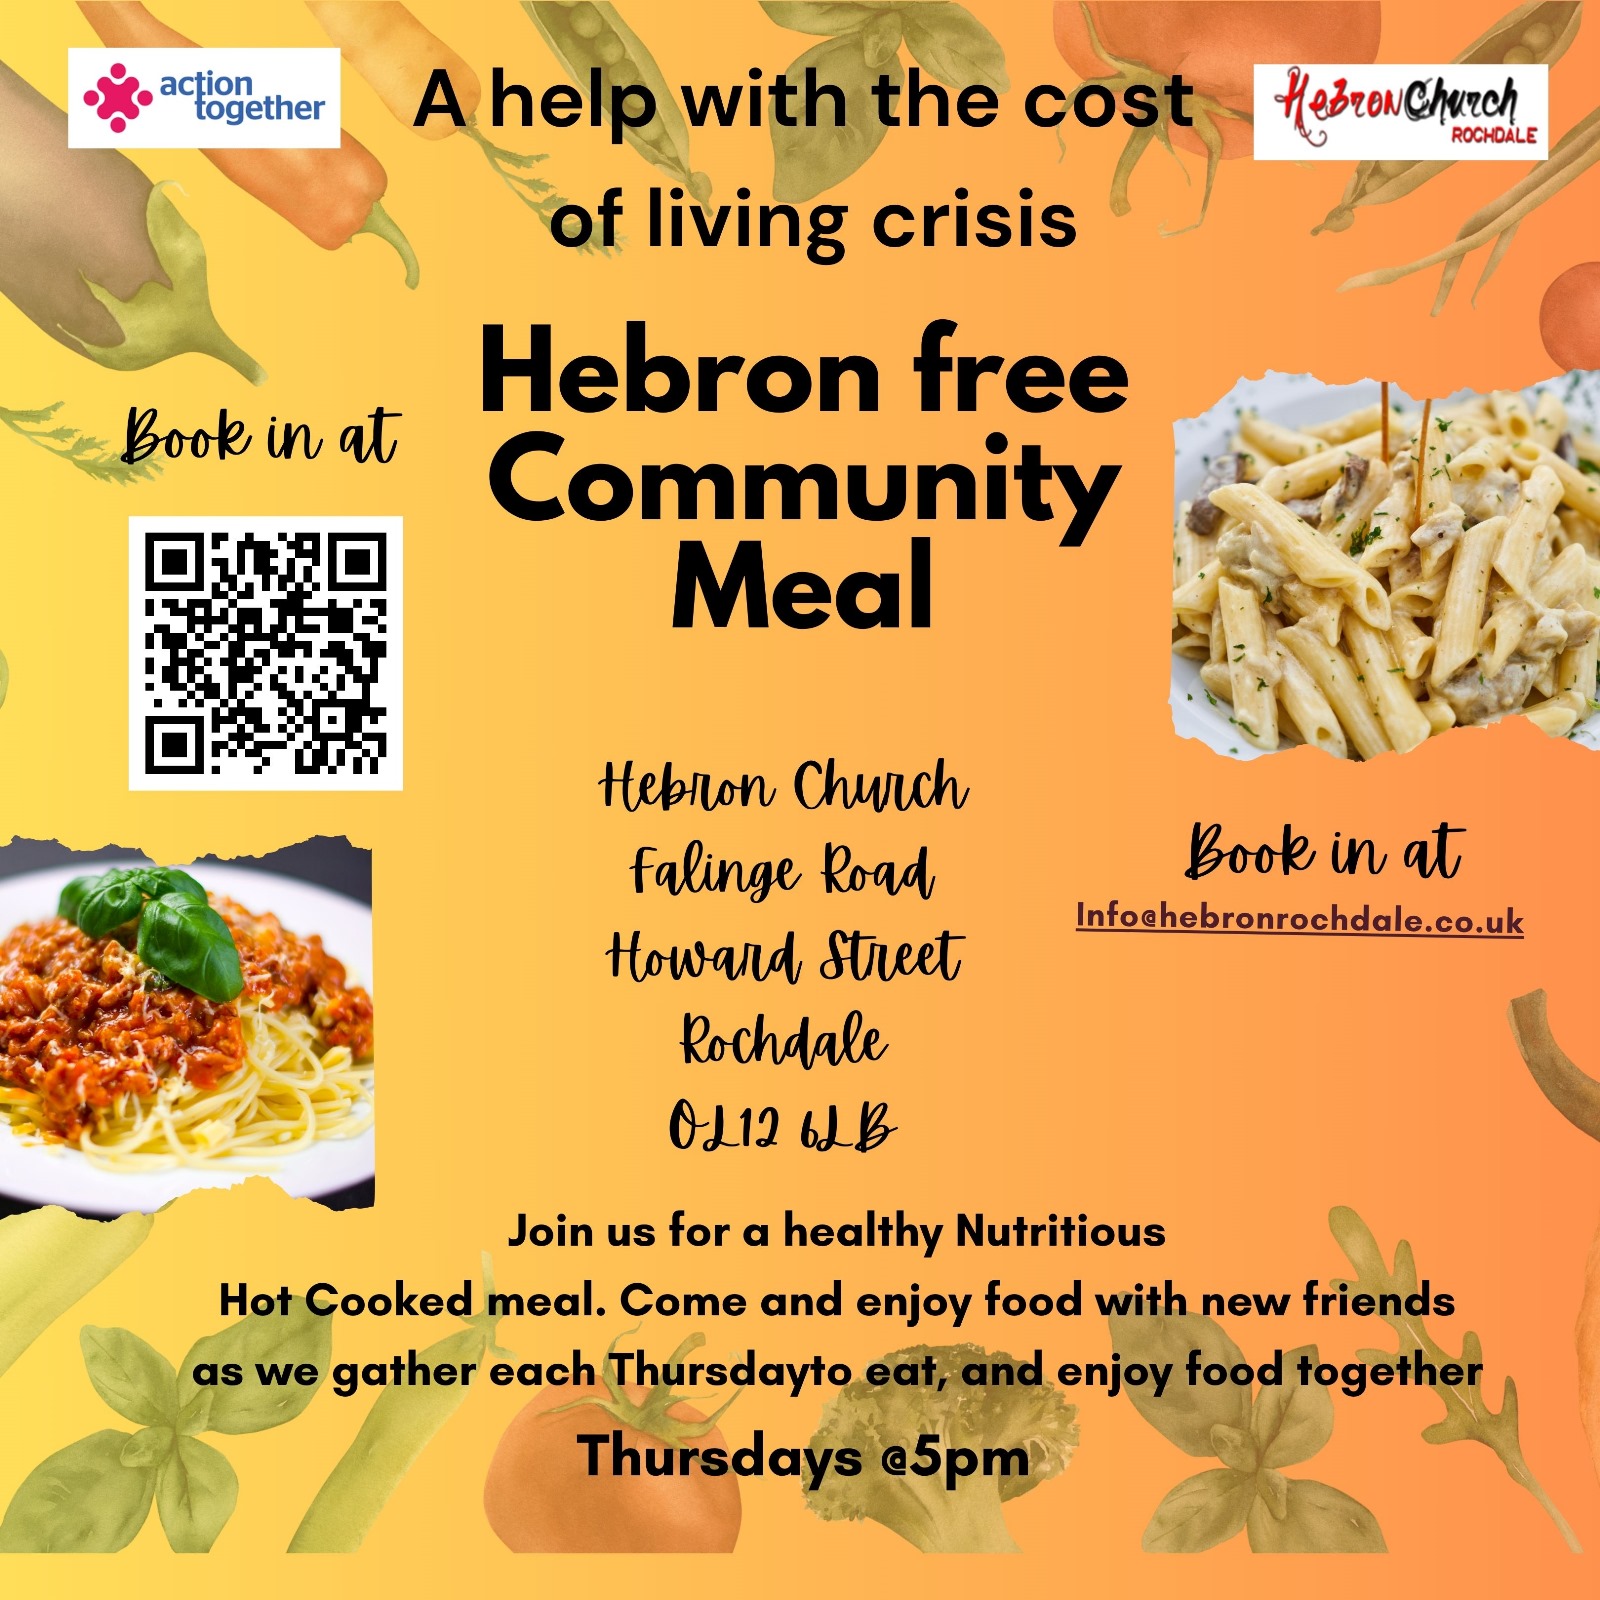 Hebron Community Meal